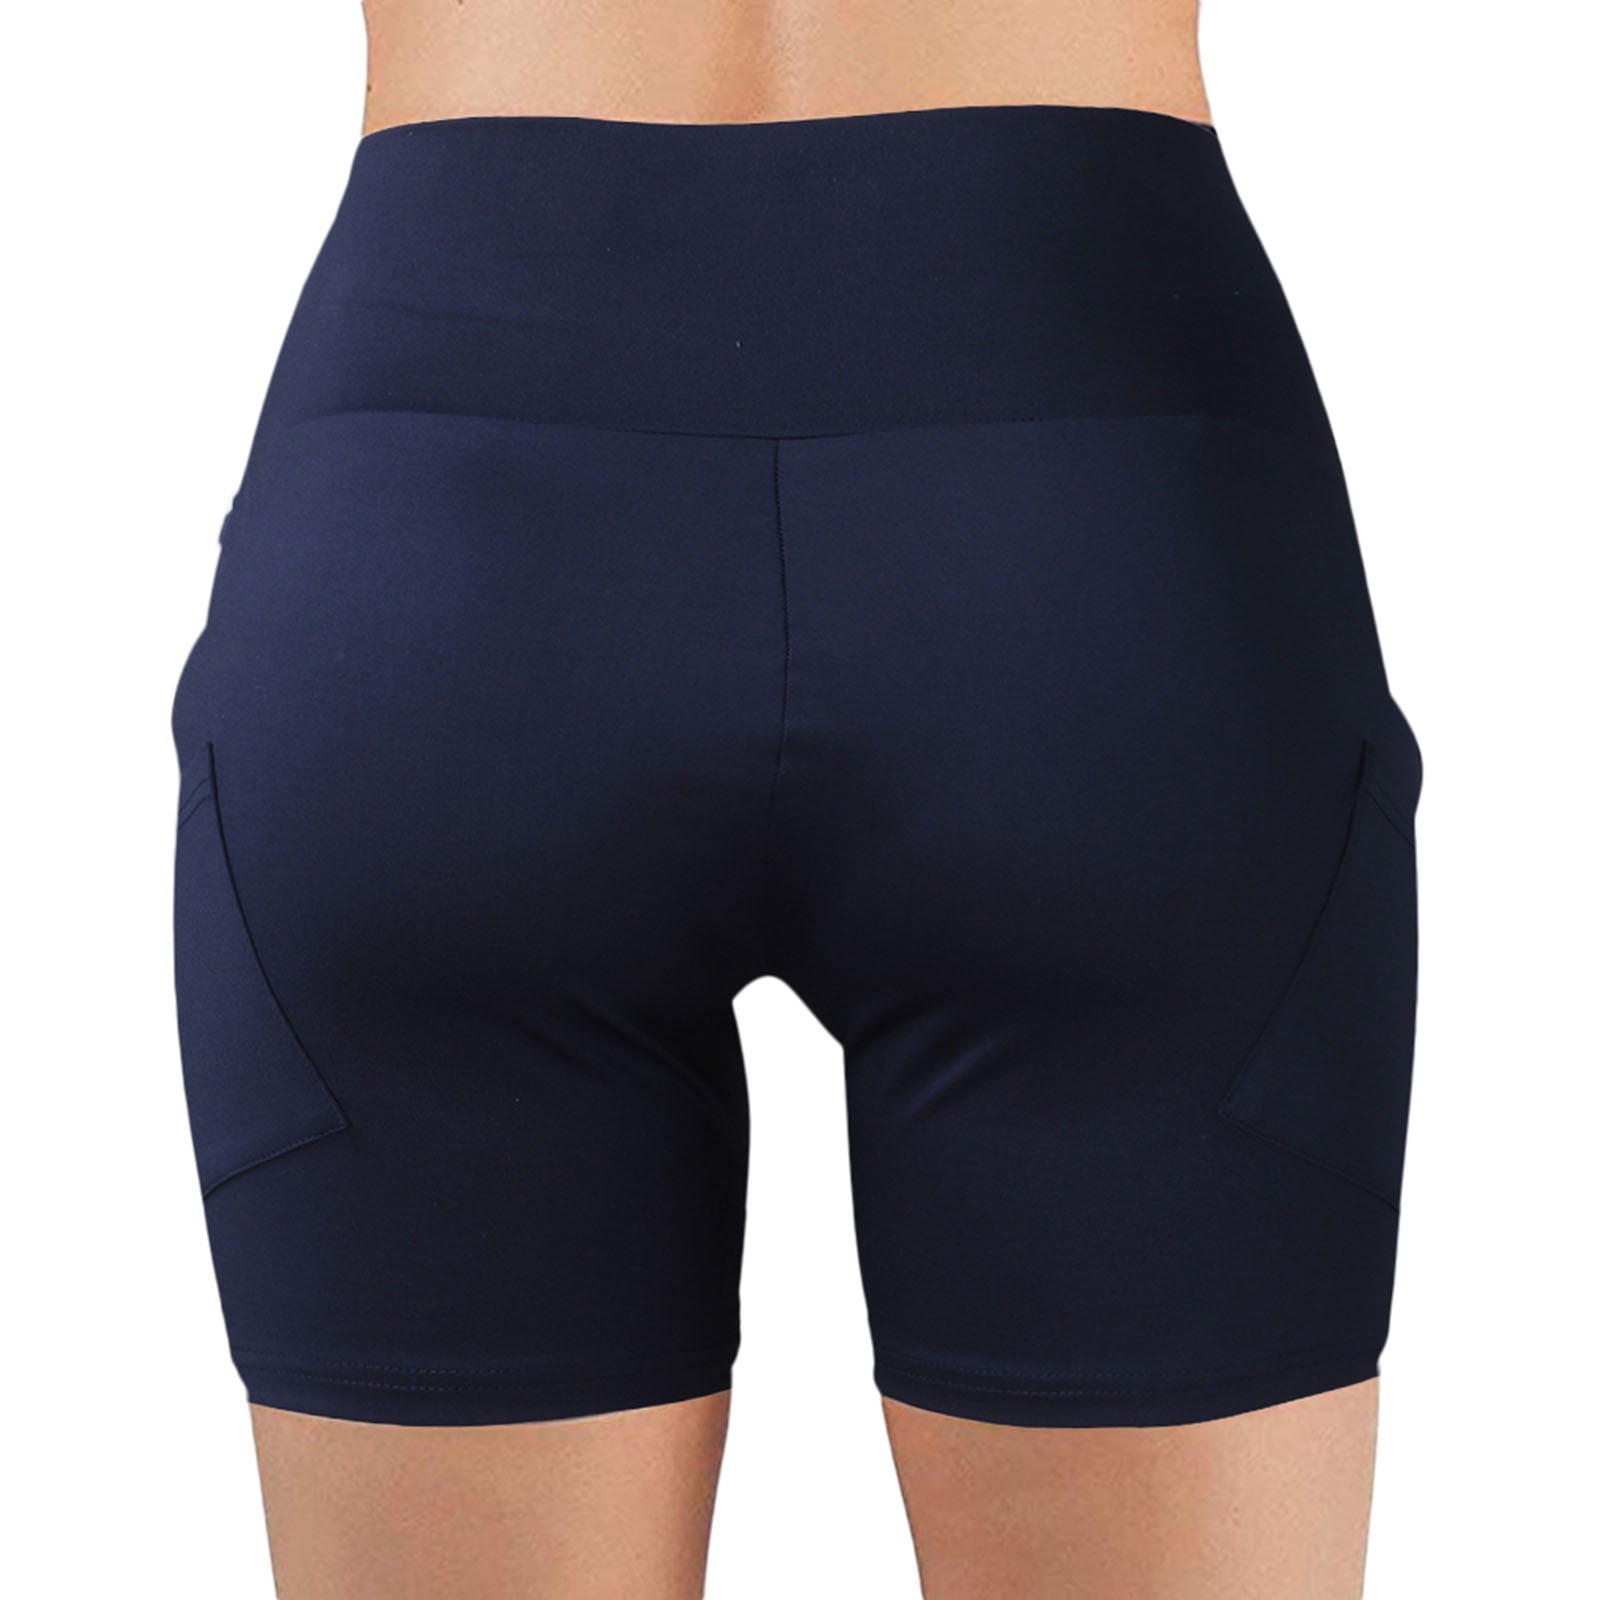 Skpblutn Women'S Pants Yoga Shorts With Side Pockets Workout Running  Compression Athletic Biker Shorts High Waist Black S